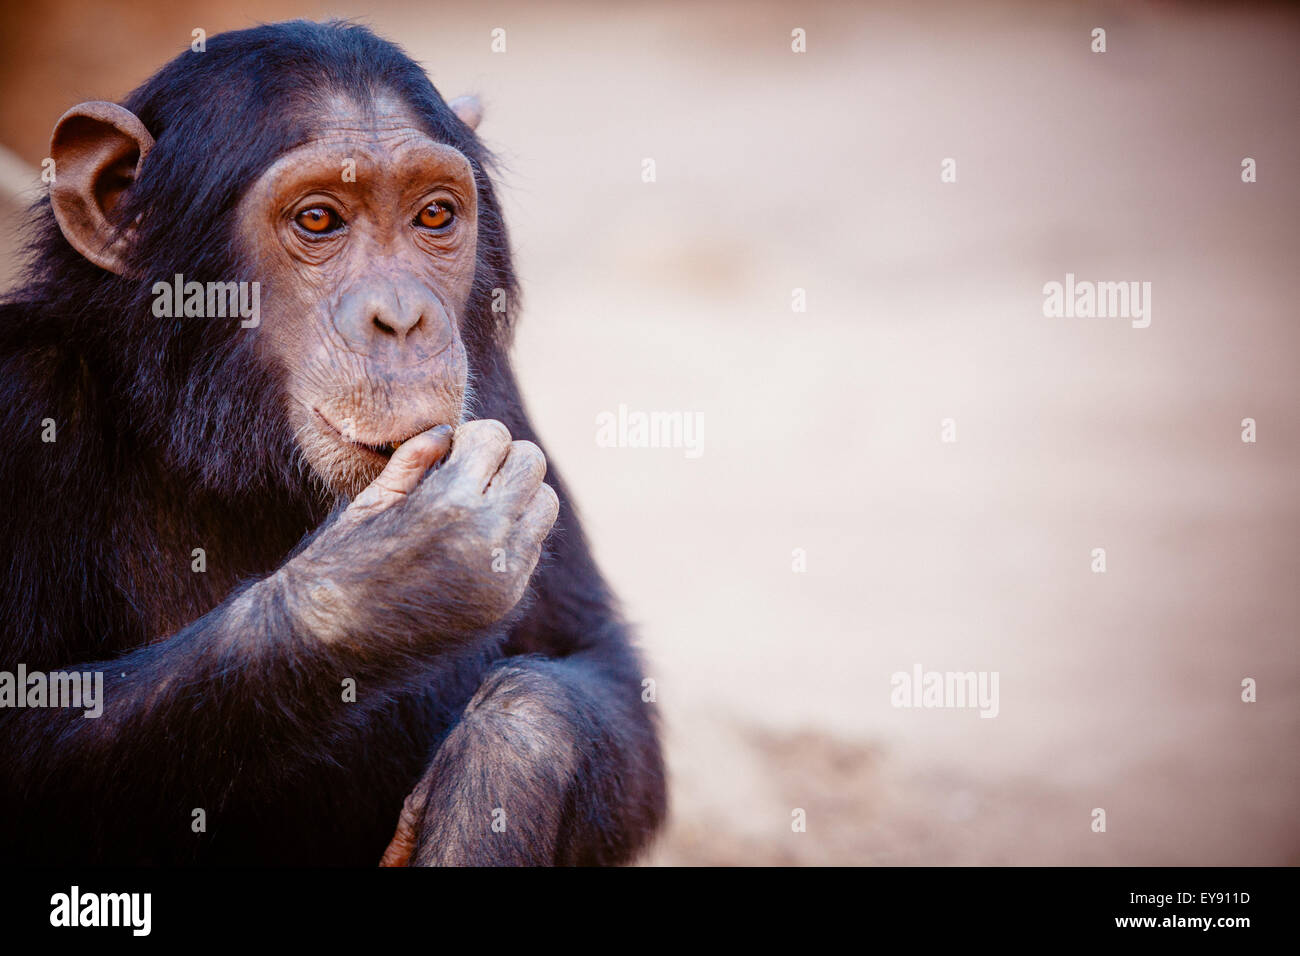 A chimpanzee sitting on the ground. Stock Photo